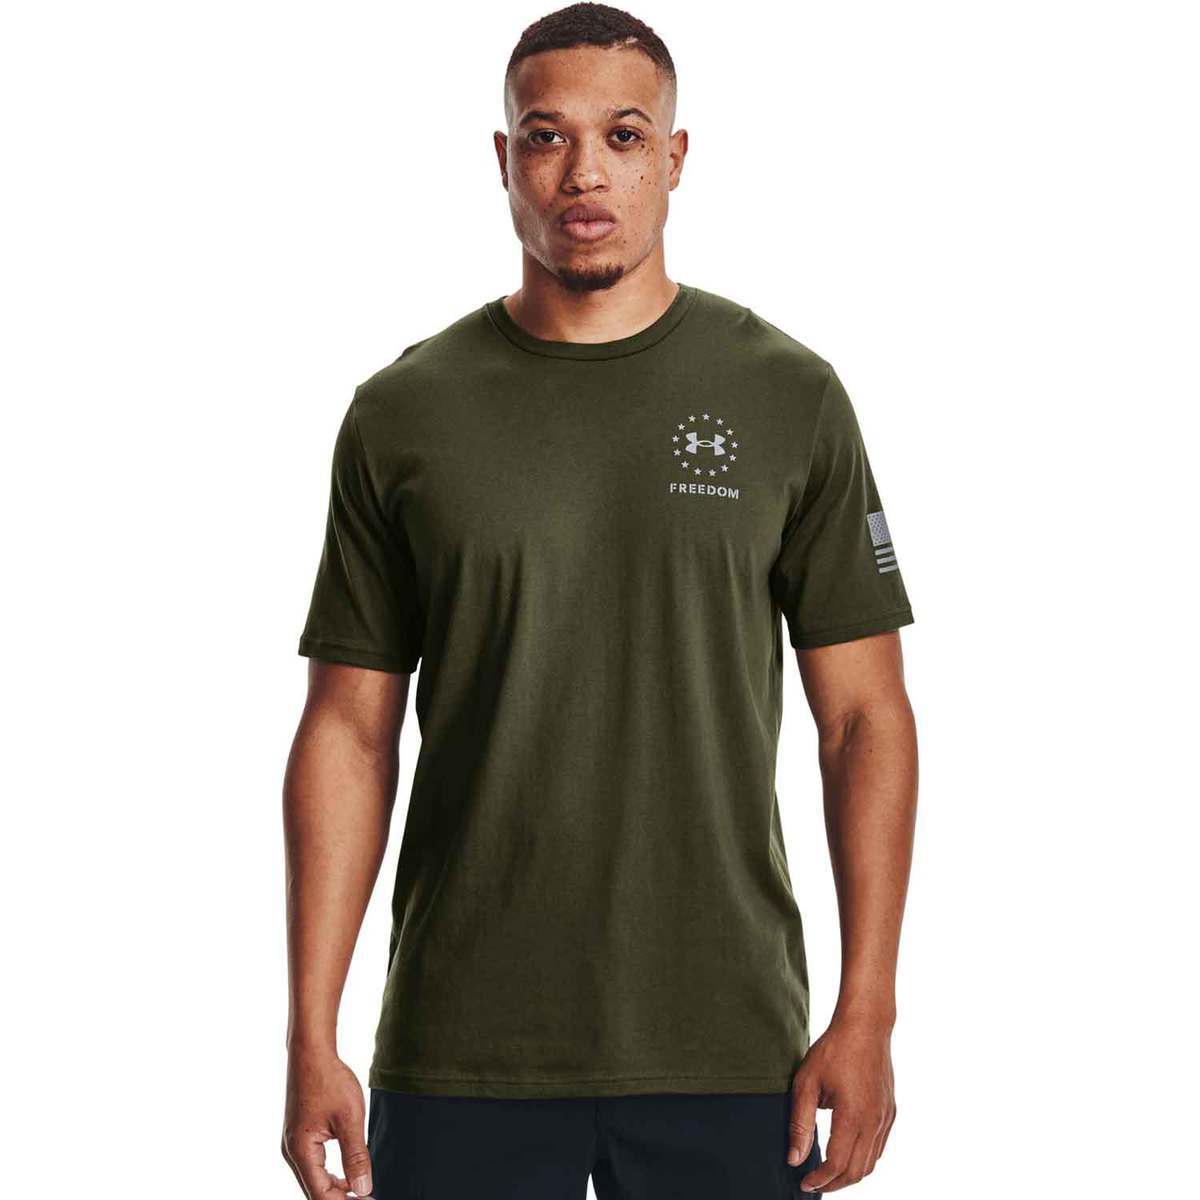 Under Armour Men's Freedom Back Stripe Short Sleeve Shirt - Military ...